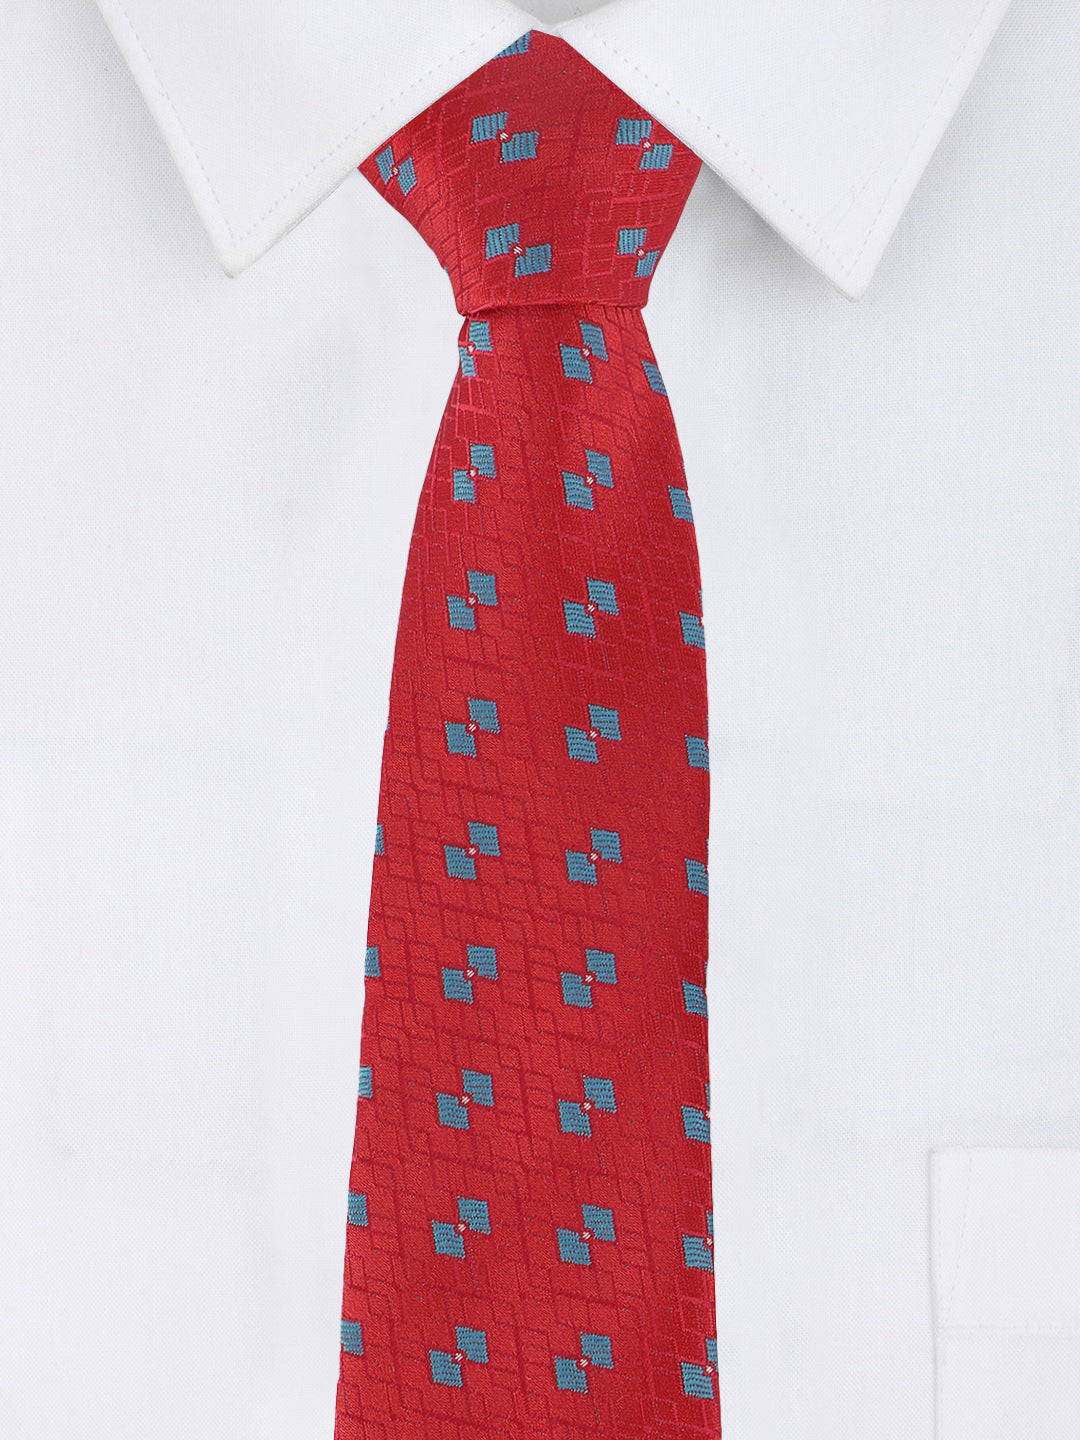 Alvaro Castagnino Microfiber RED AND BLUE Colored Necktie for Men